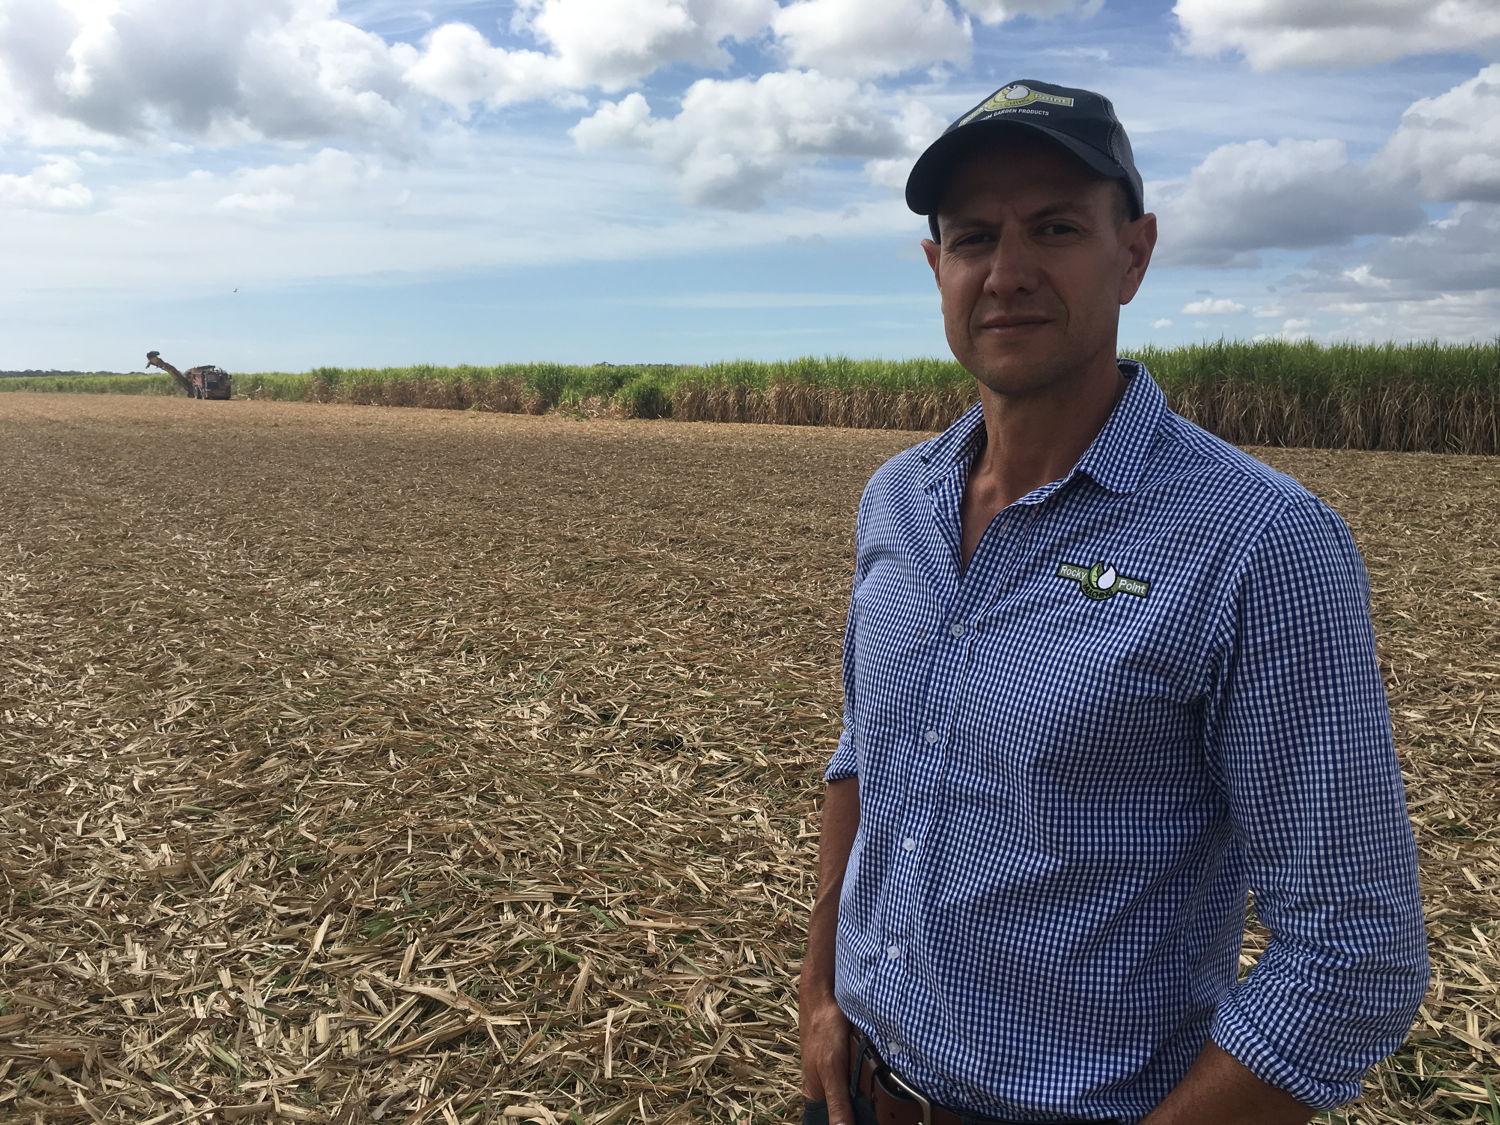 Matthew Keith – 2016 Australian Farmer of the Year